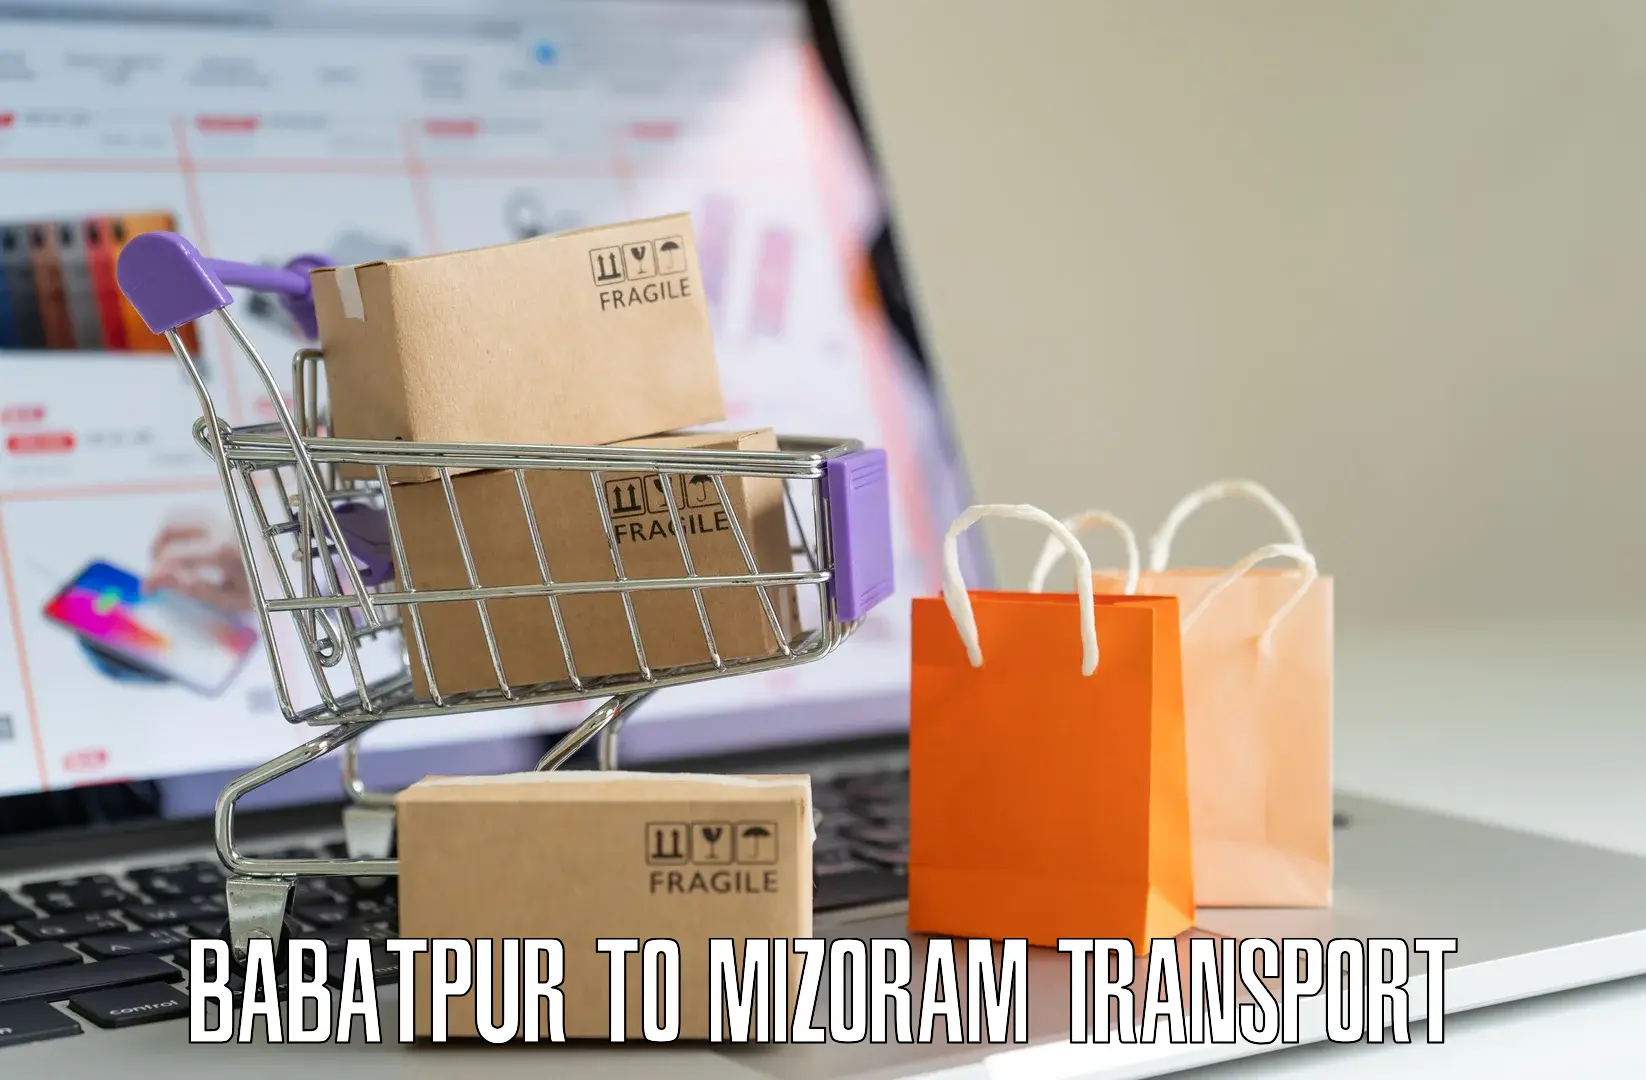 Container transport service Babatpur to Mizoram